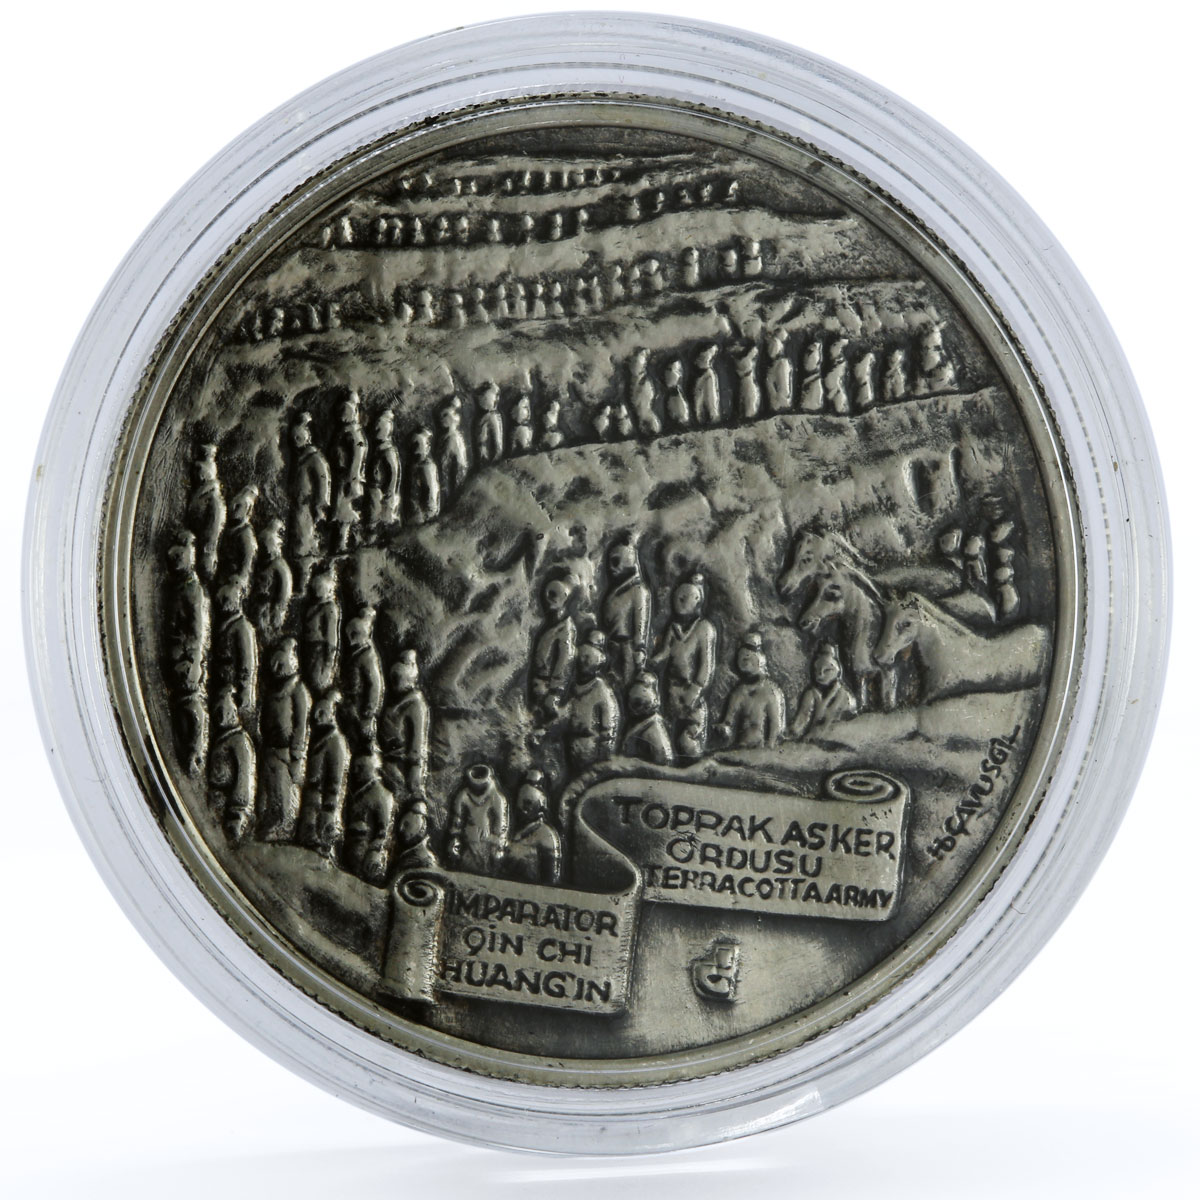 Turkey 1000000 lira World of Wonders Great Chinese Wall silver coin 1997